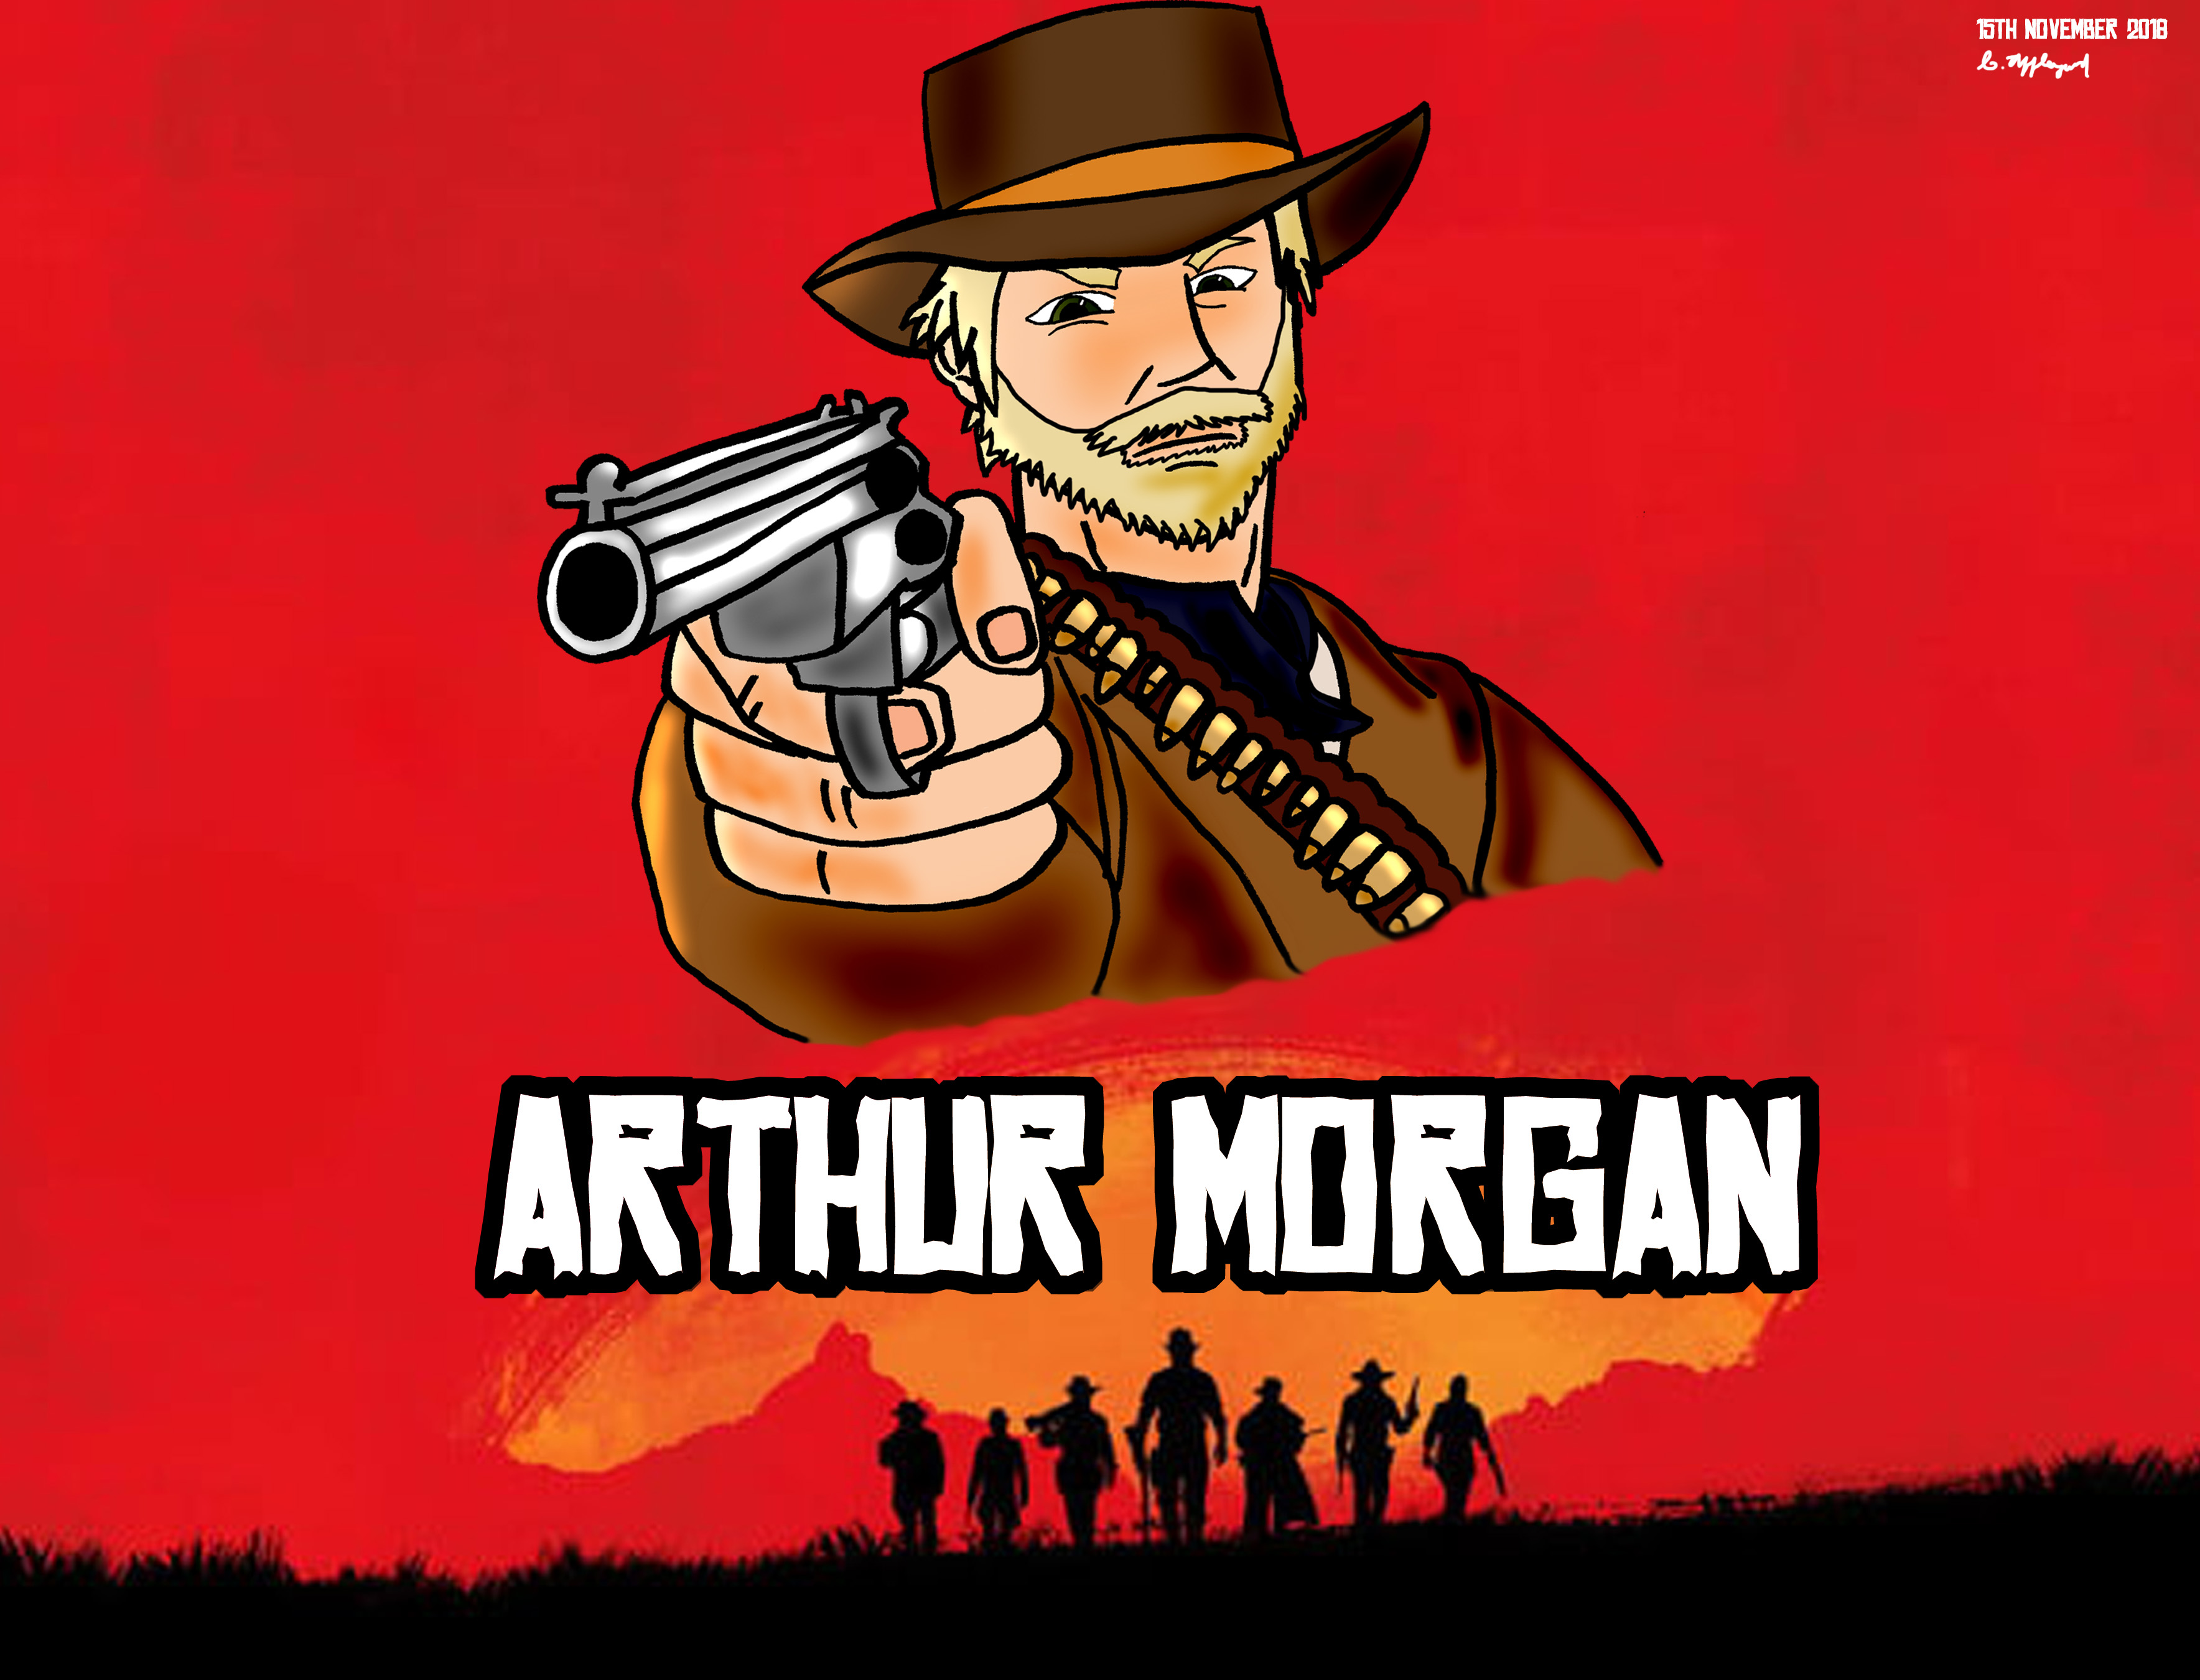 The Death of Arthur Morgan by CalebBaconator on DeviantArt